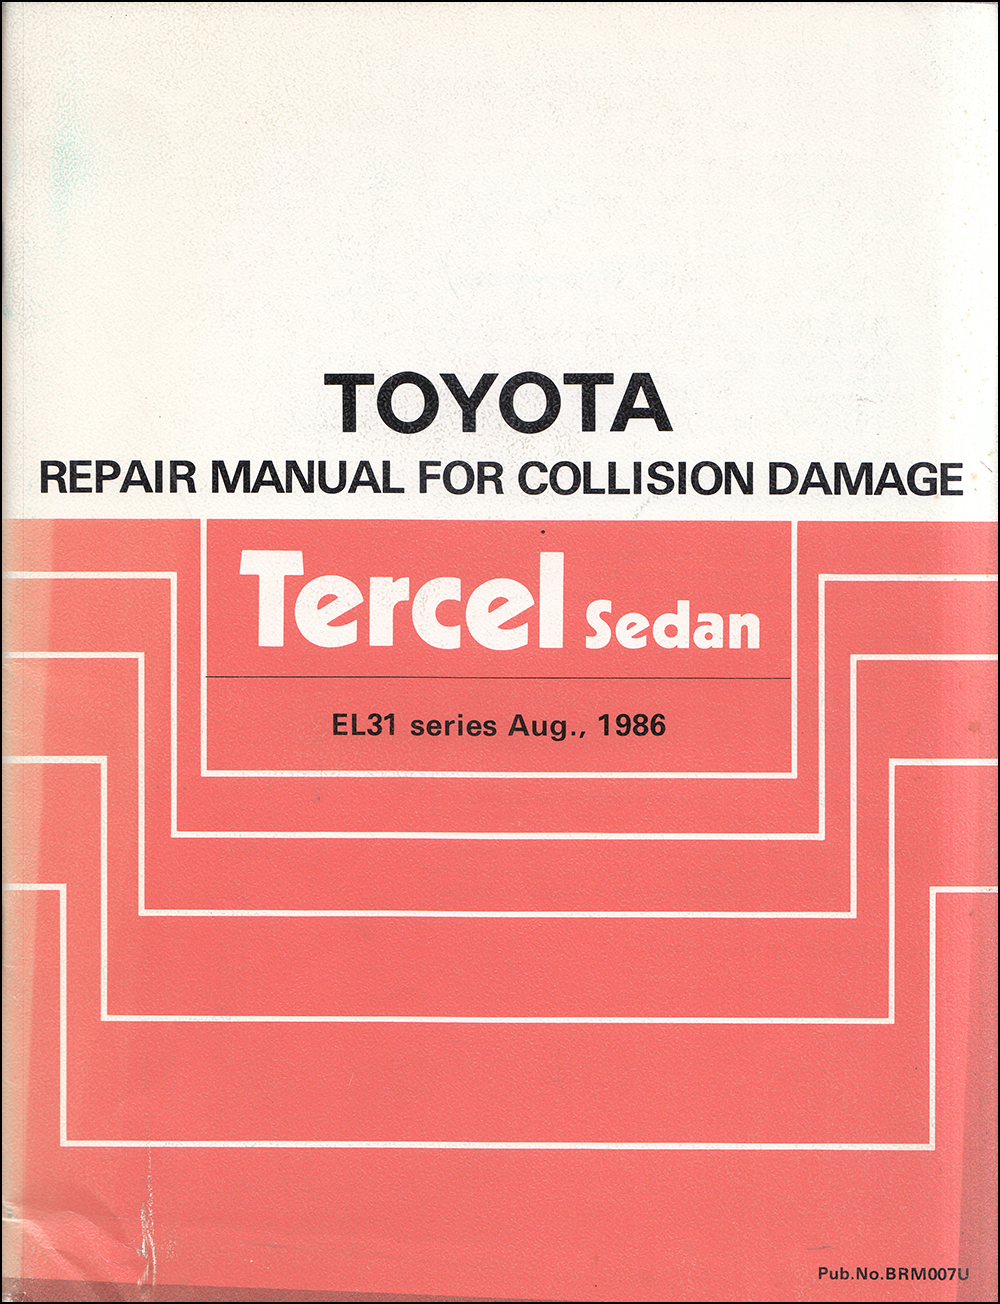 1987-1990 Toyota Tercel Sedan Body Collision Manual Original